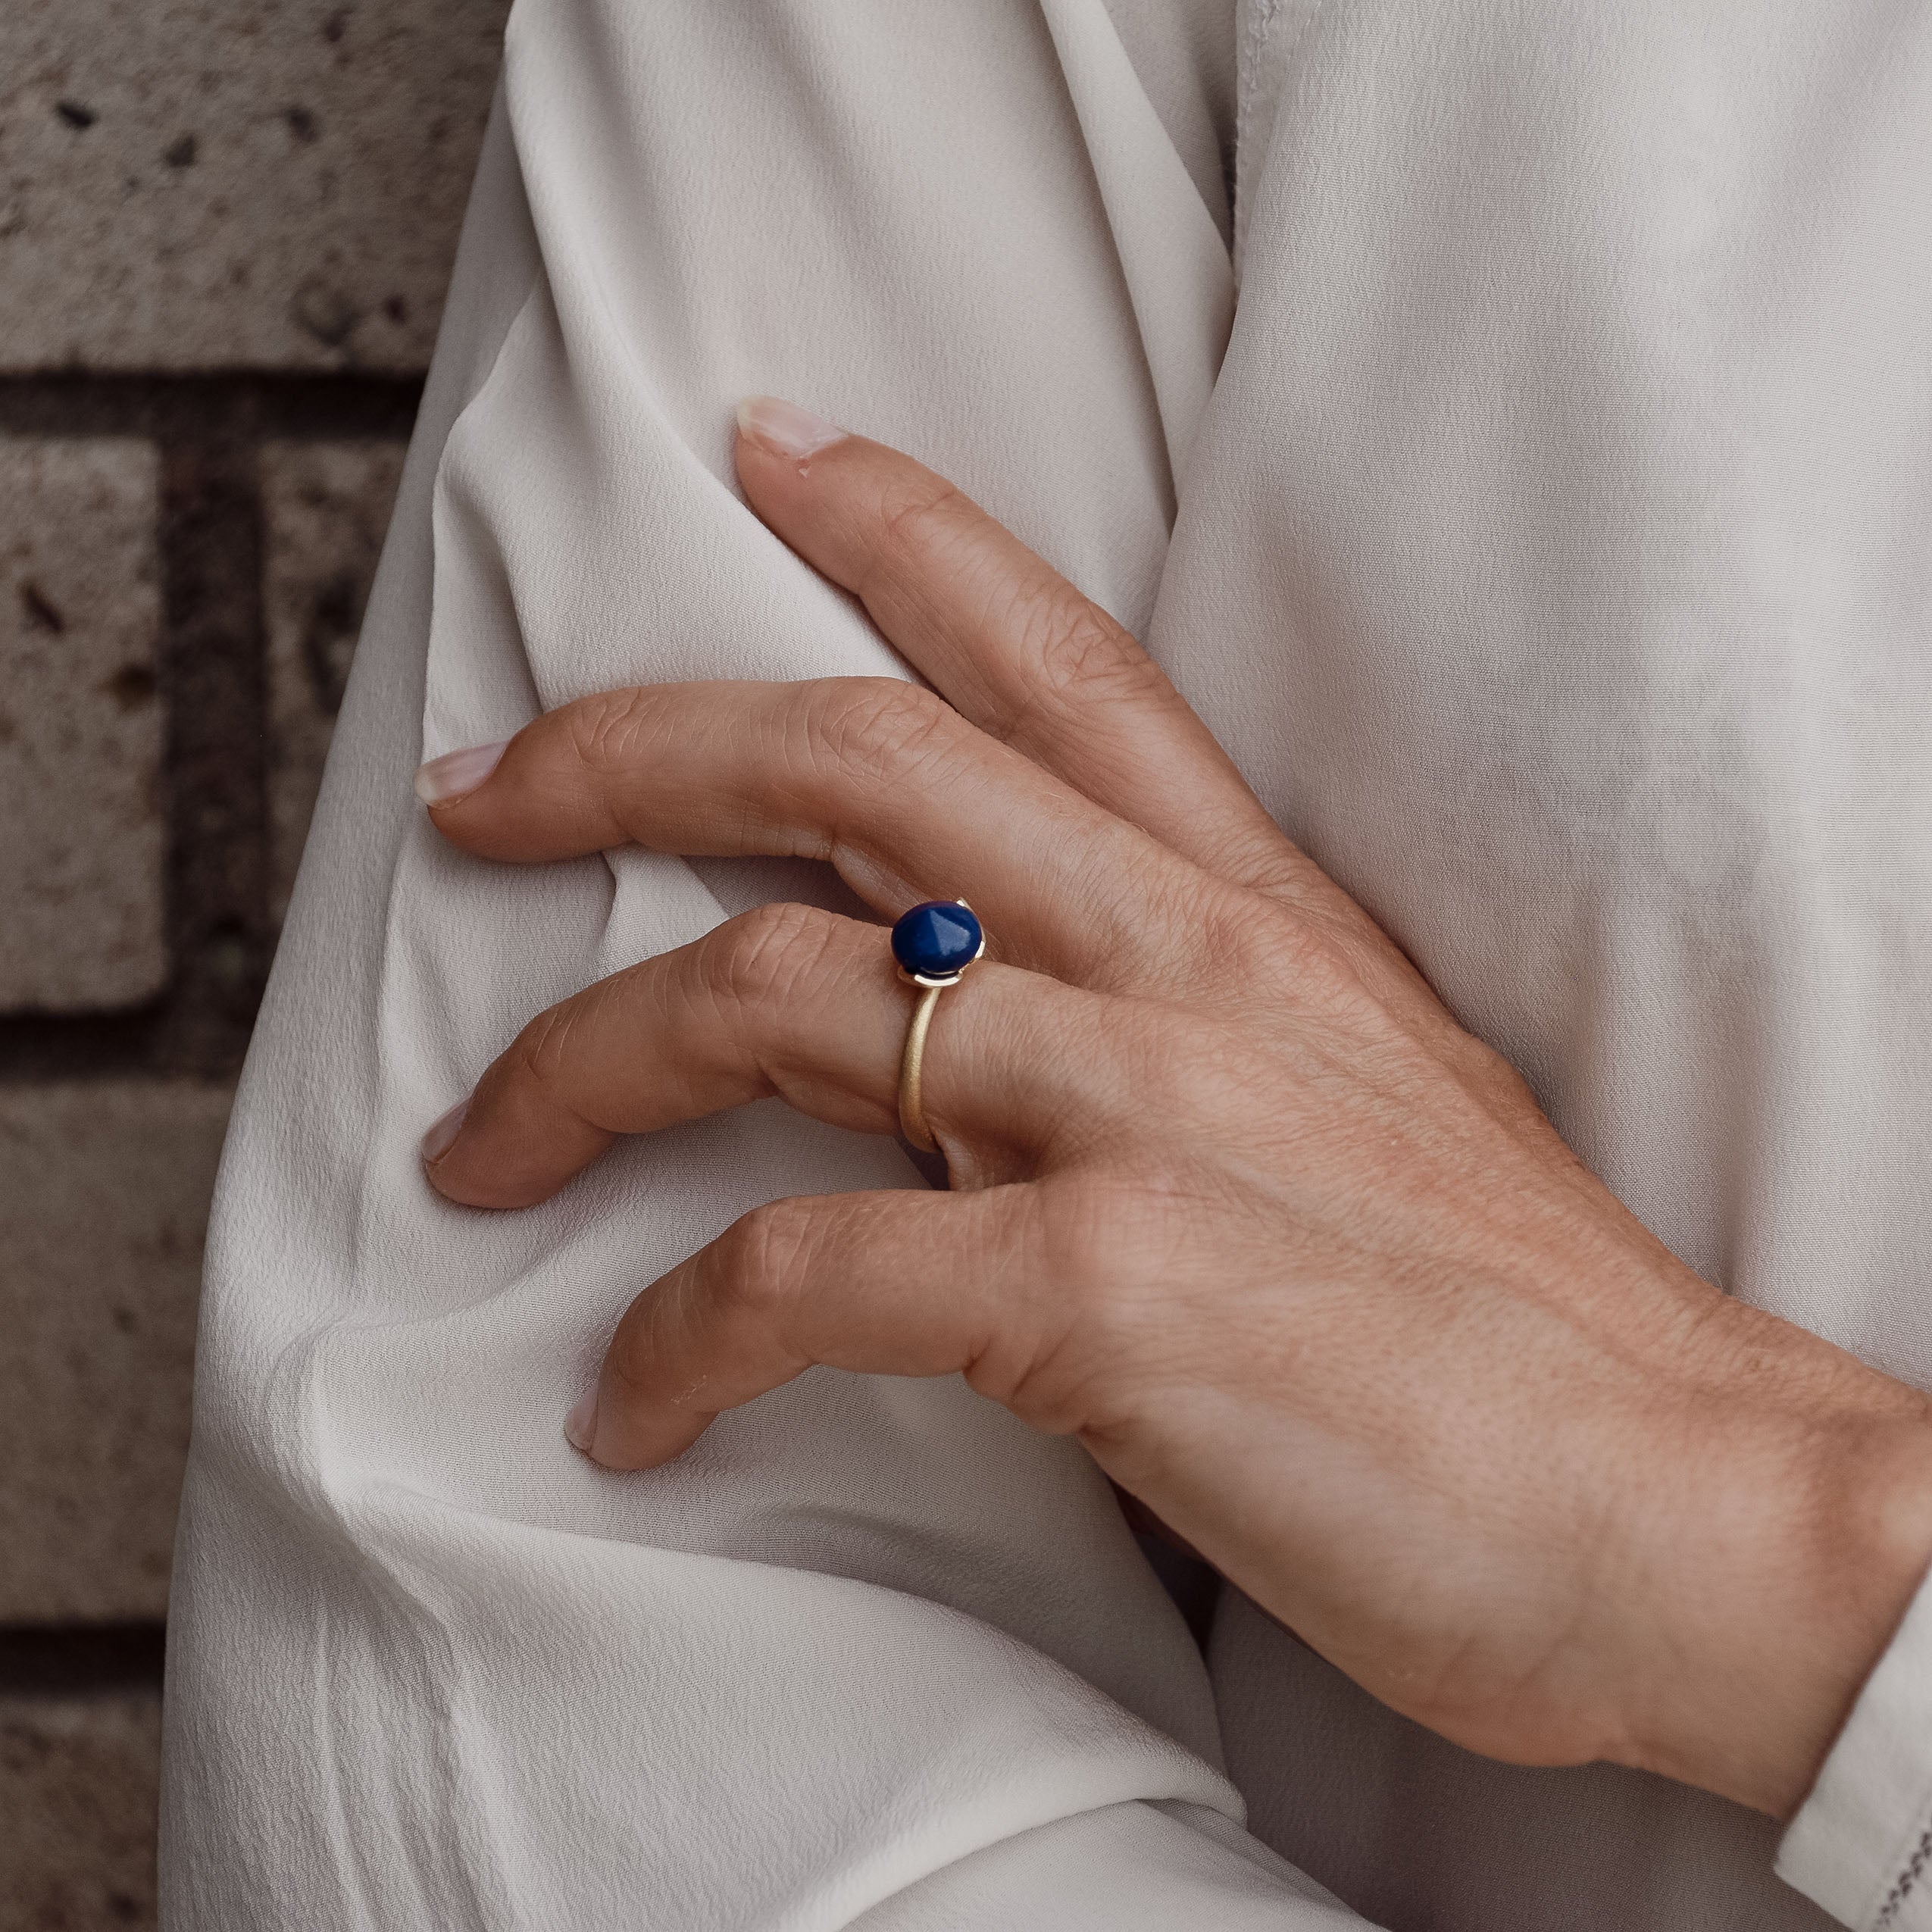 Dolce ring "smal" med lapis lazuli 925/-